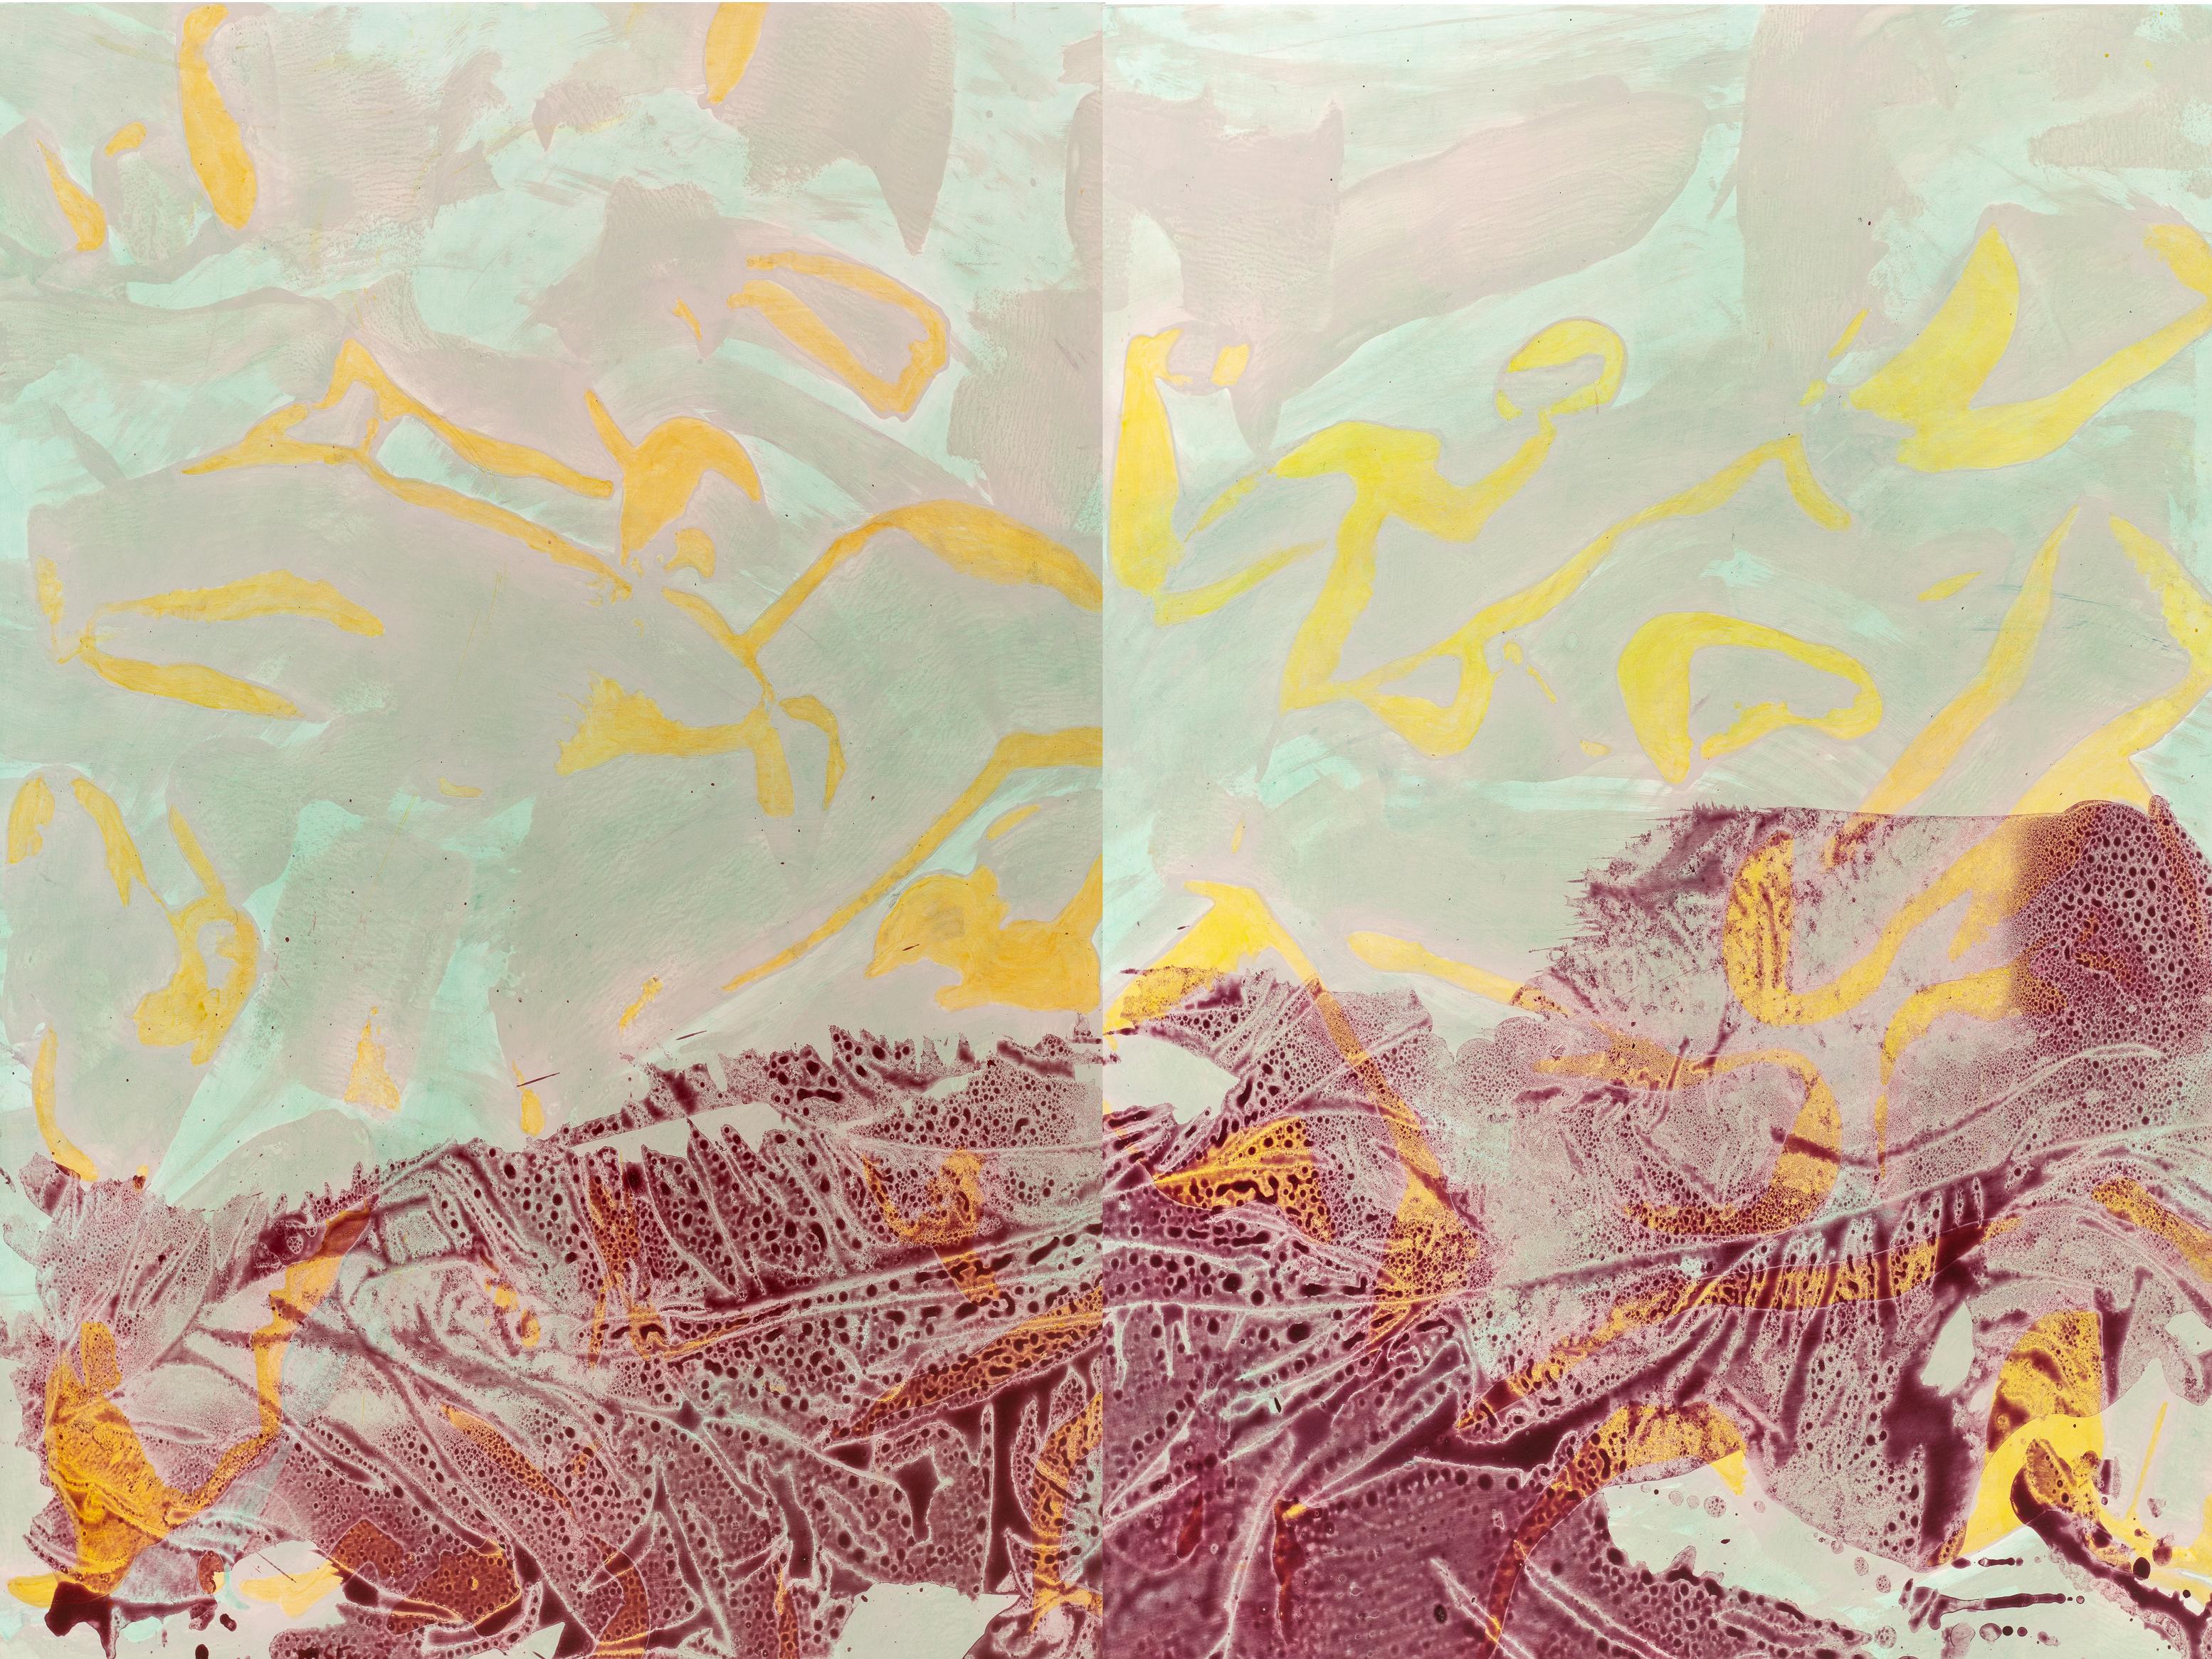 Abstract Painting Marlene Struss - Crossing Over - Peinture abstraite de paysage de montagne